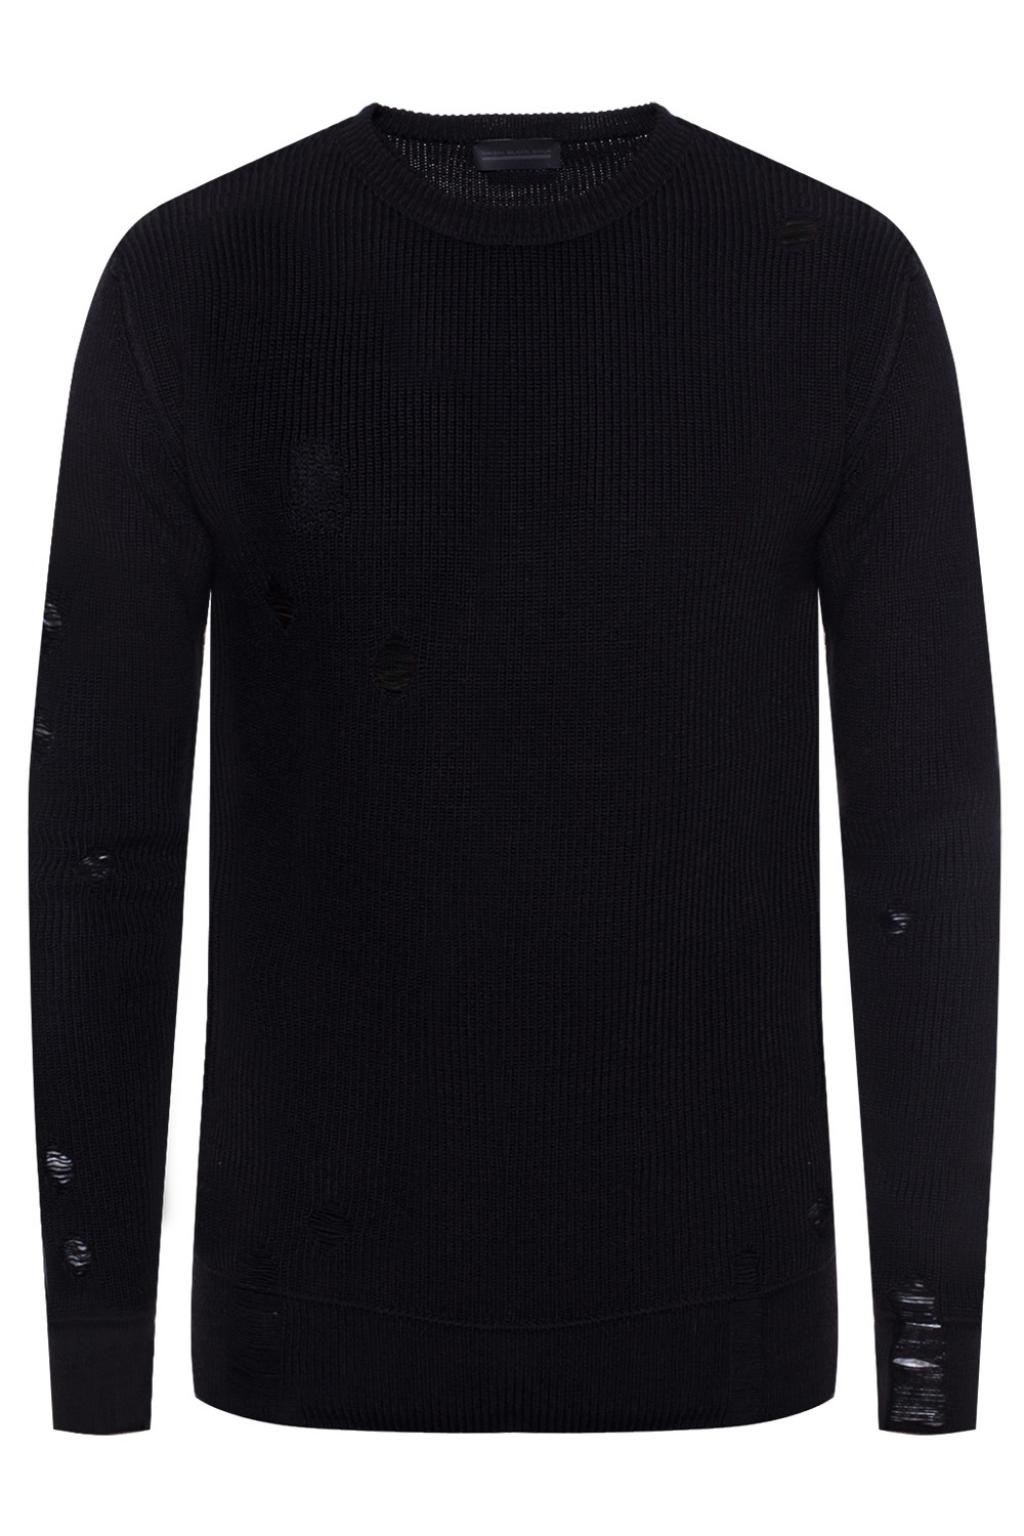 grad Imagination Gensidig Ribbed sweater with holes Diesel Black Gold - Vitkac US